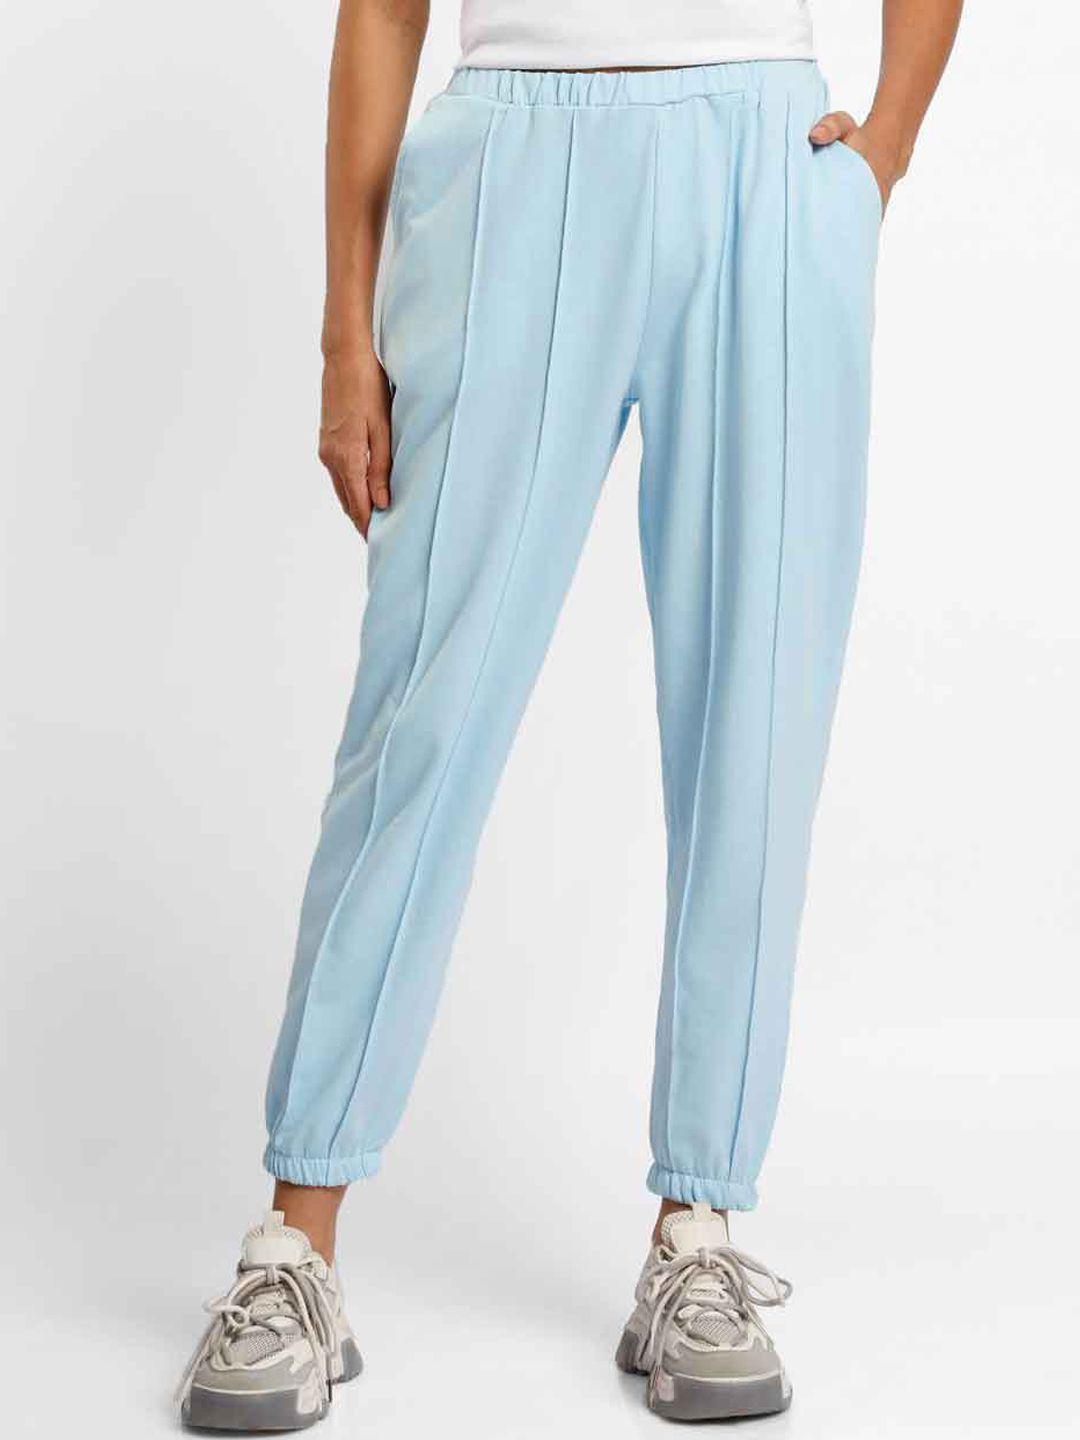 nobero-women-blue-striped-joggers-trousers